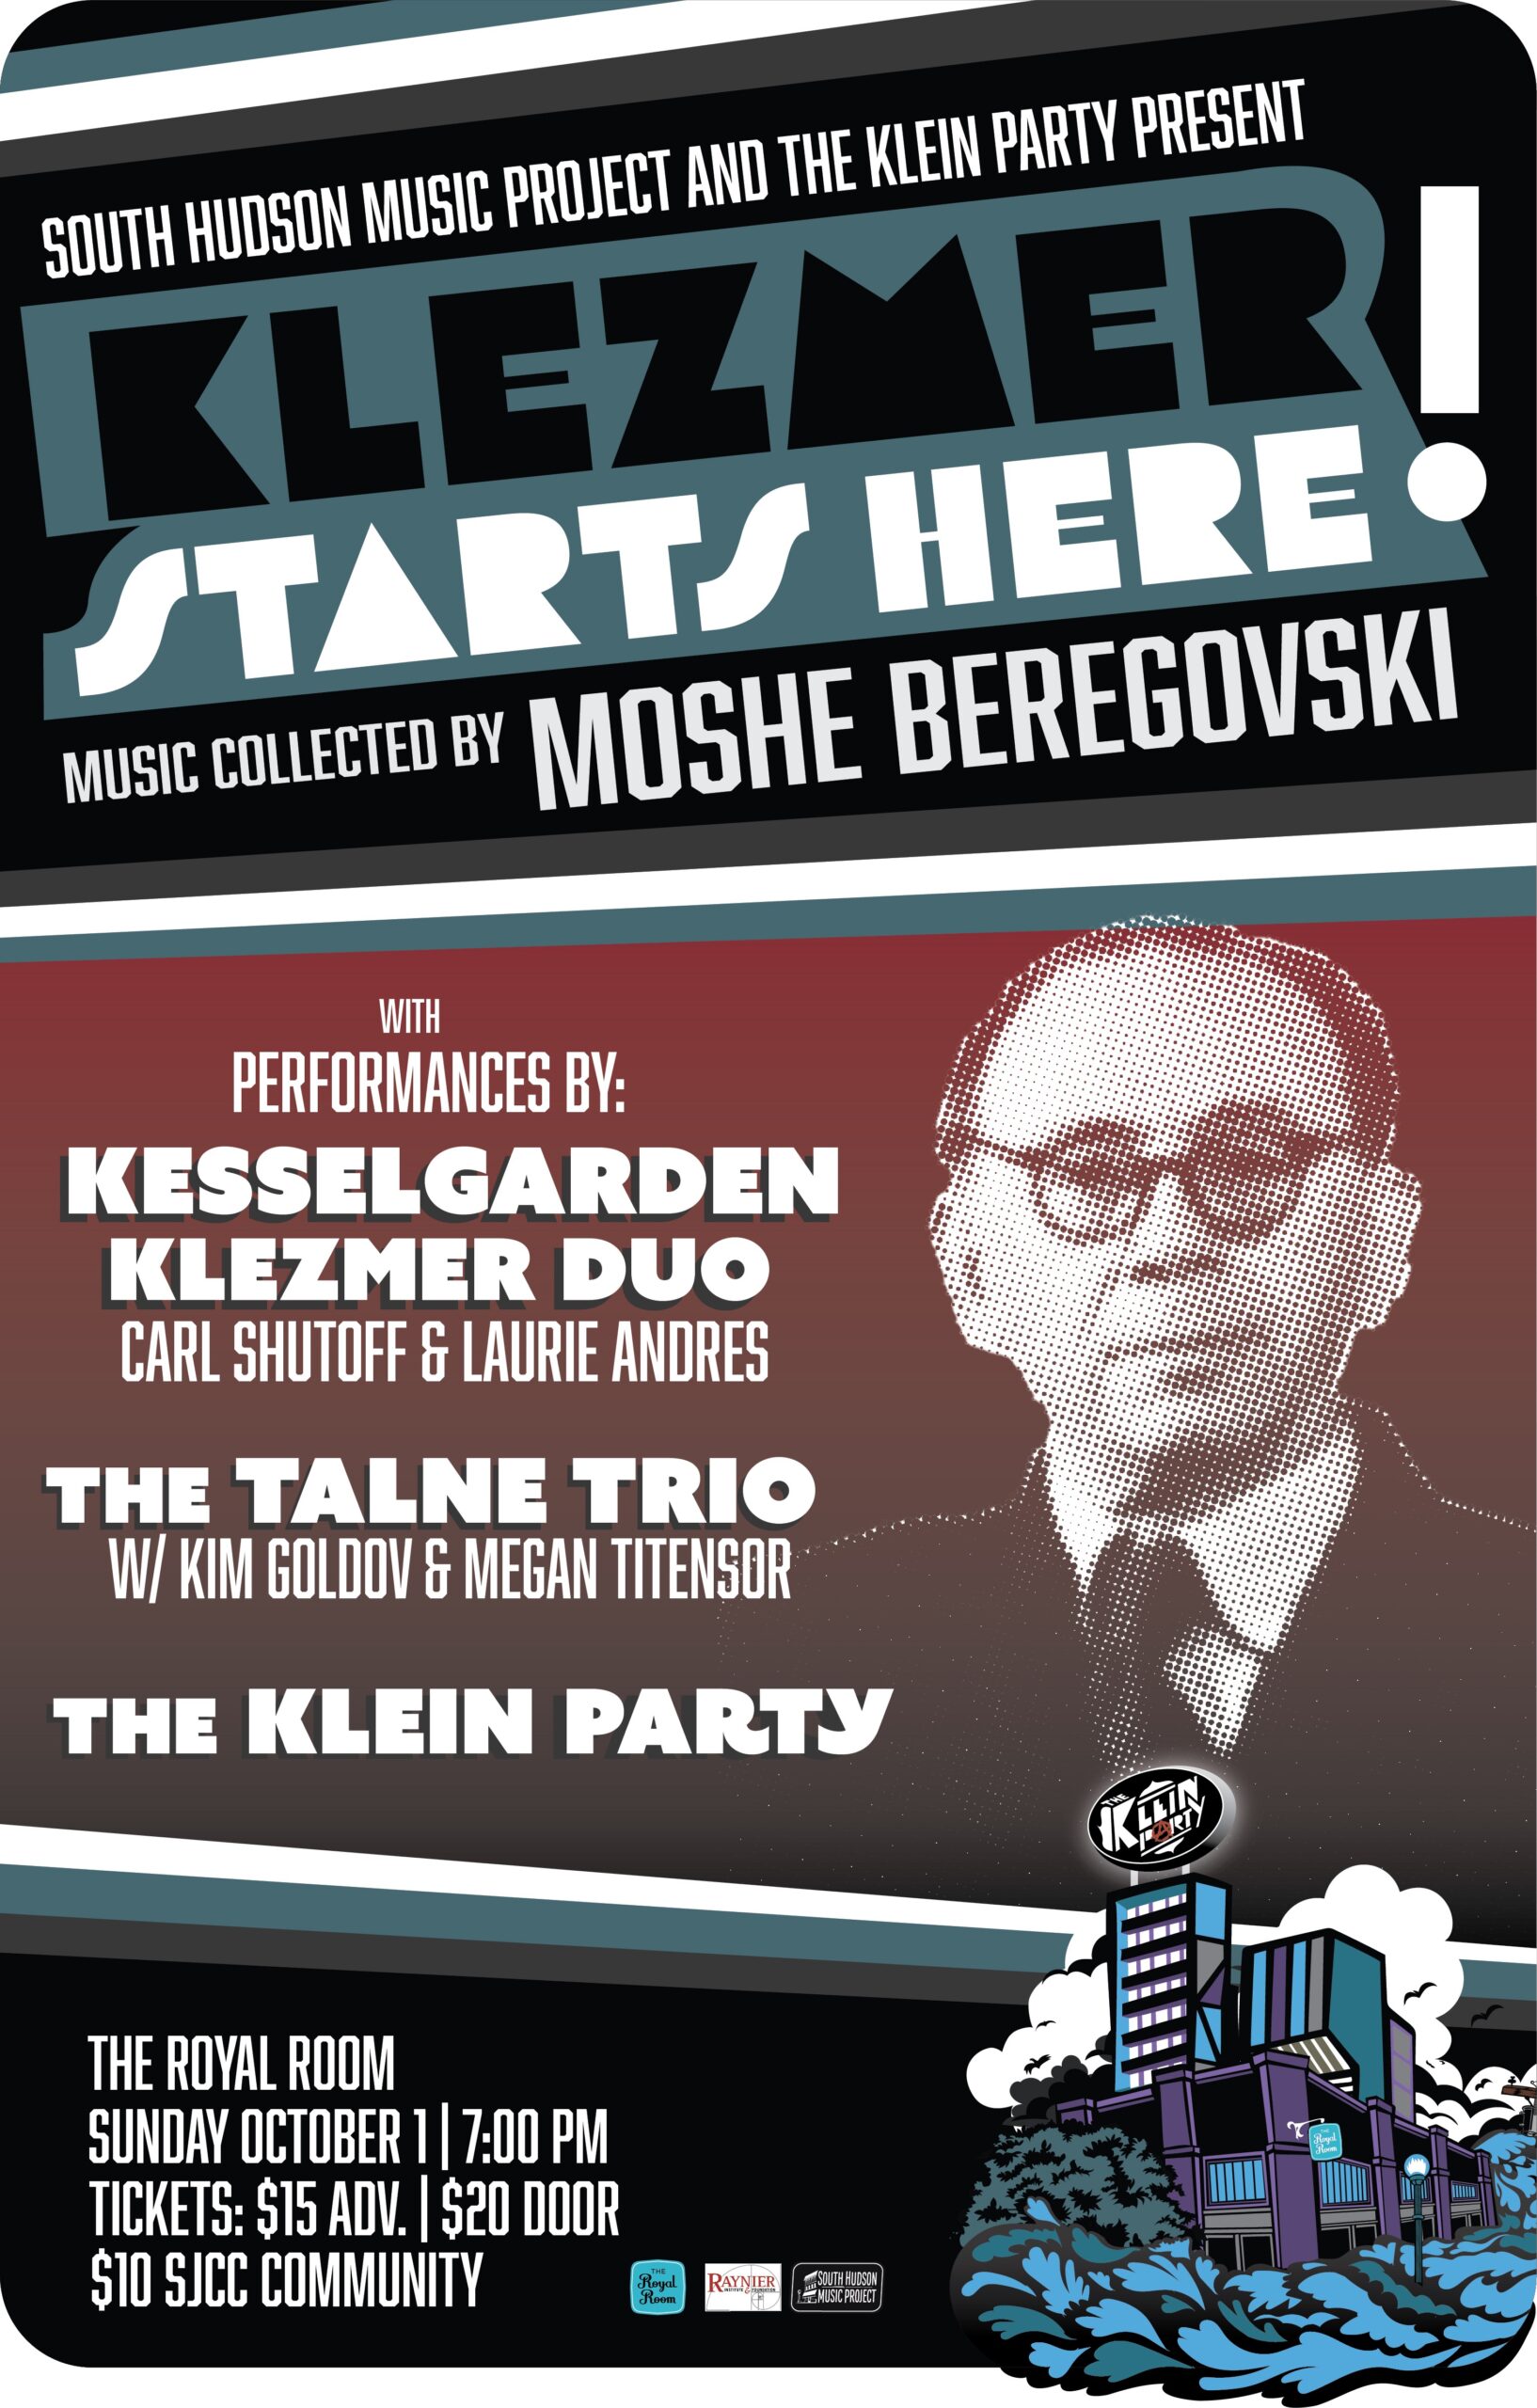 Klezmer Starts Here!: Music Collected by Moshe Beregovski